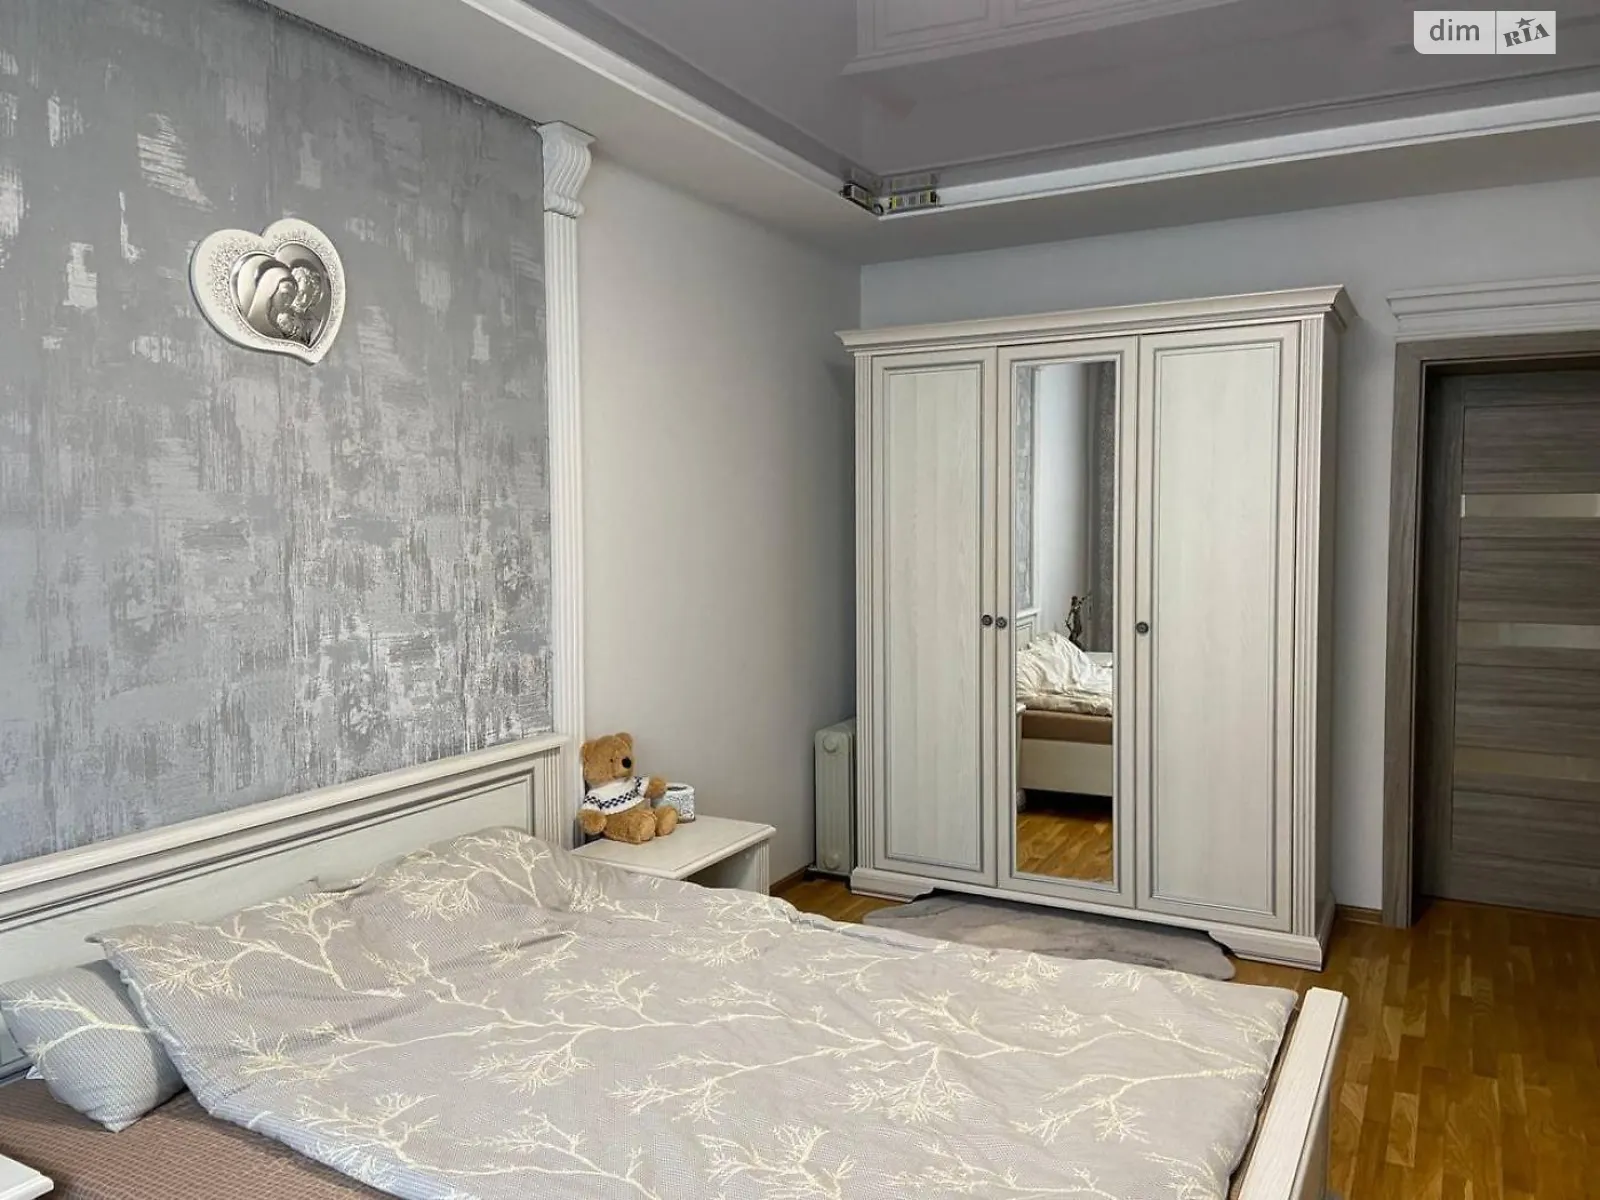 Сдается в аренду 2-комнатная квартира 68 кв. м в Львове, ул. Княгини Ольги, 122А - фото 1